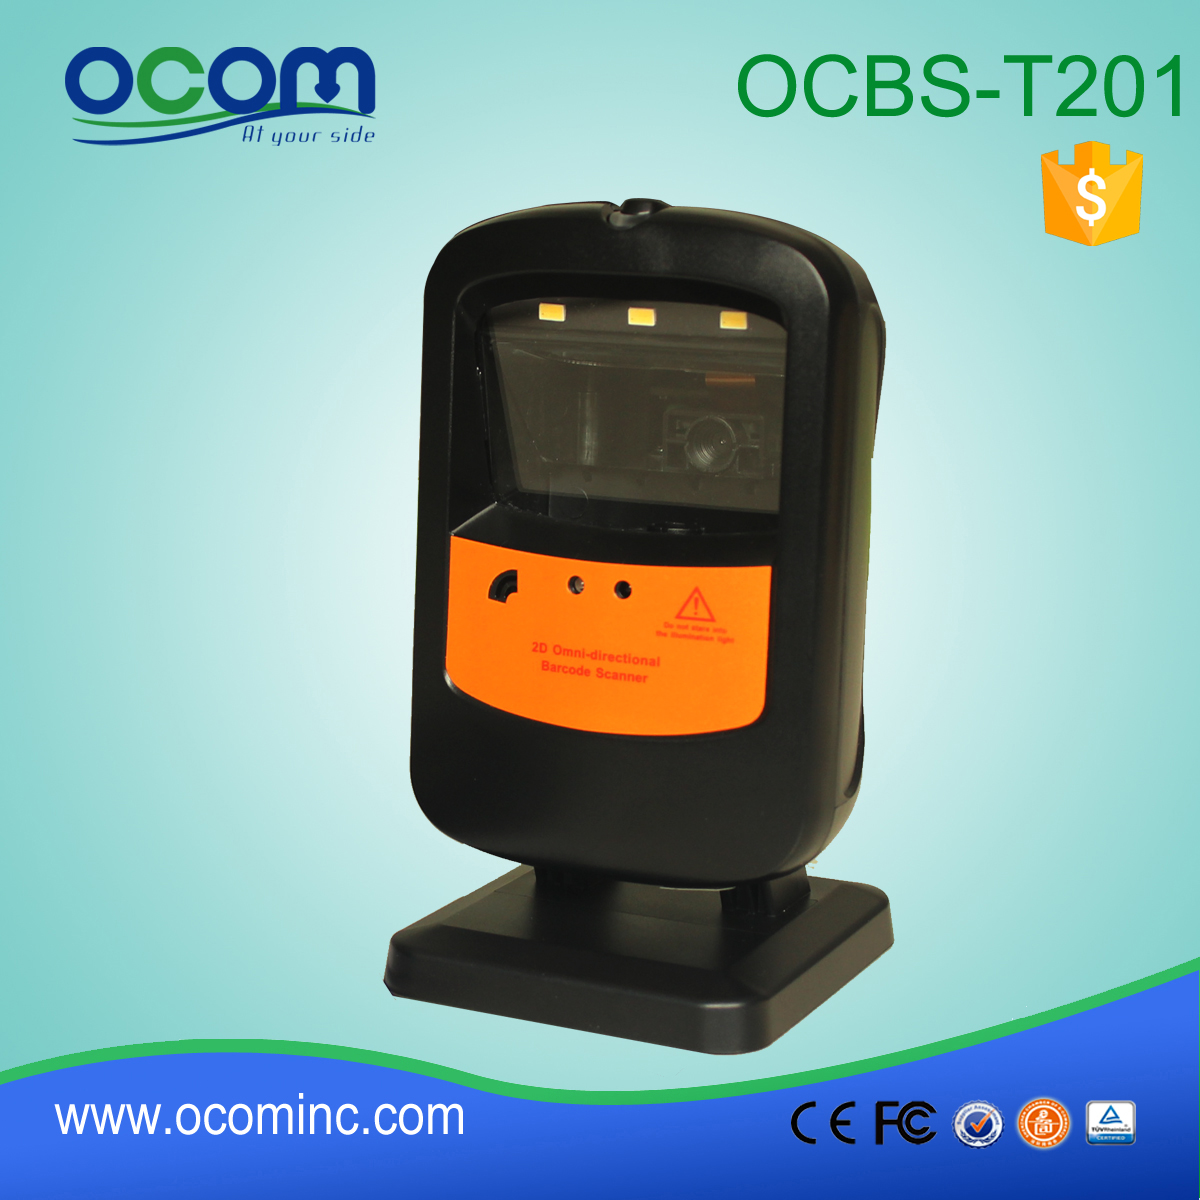 OCBs-T201: Κίνα RS232 σαρωτή γραμμωτού κώδικα, barcode scanner φθηνά